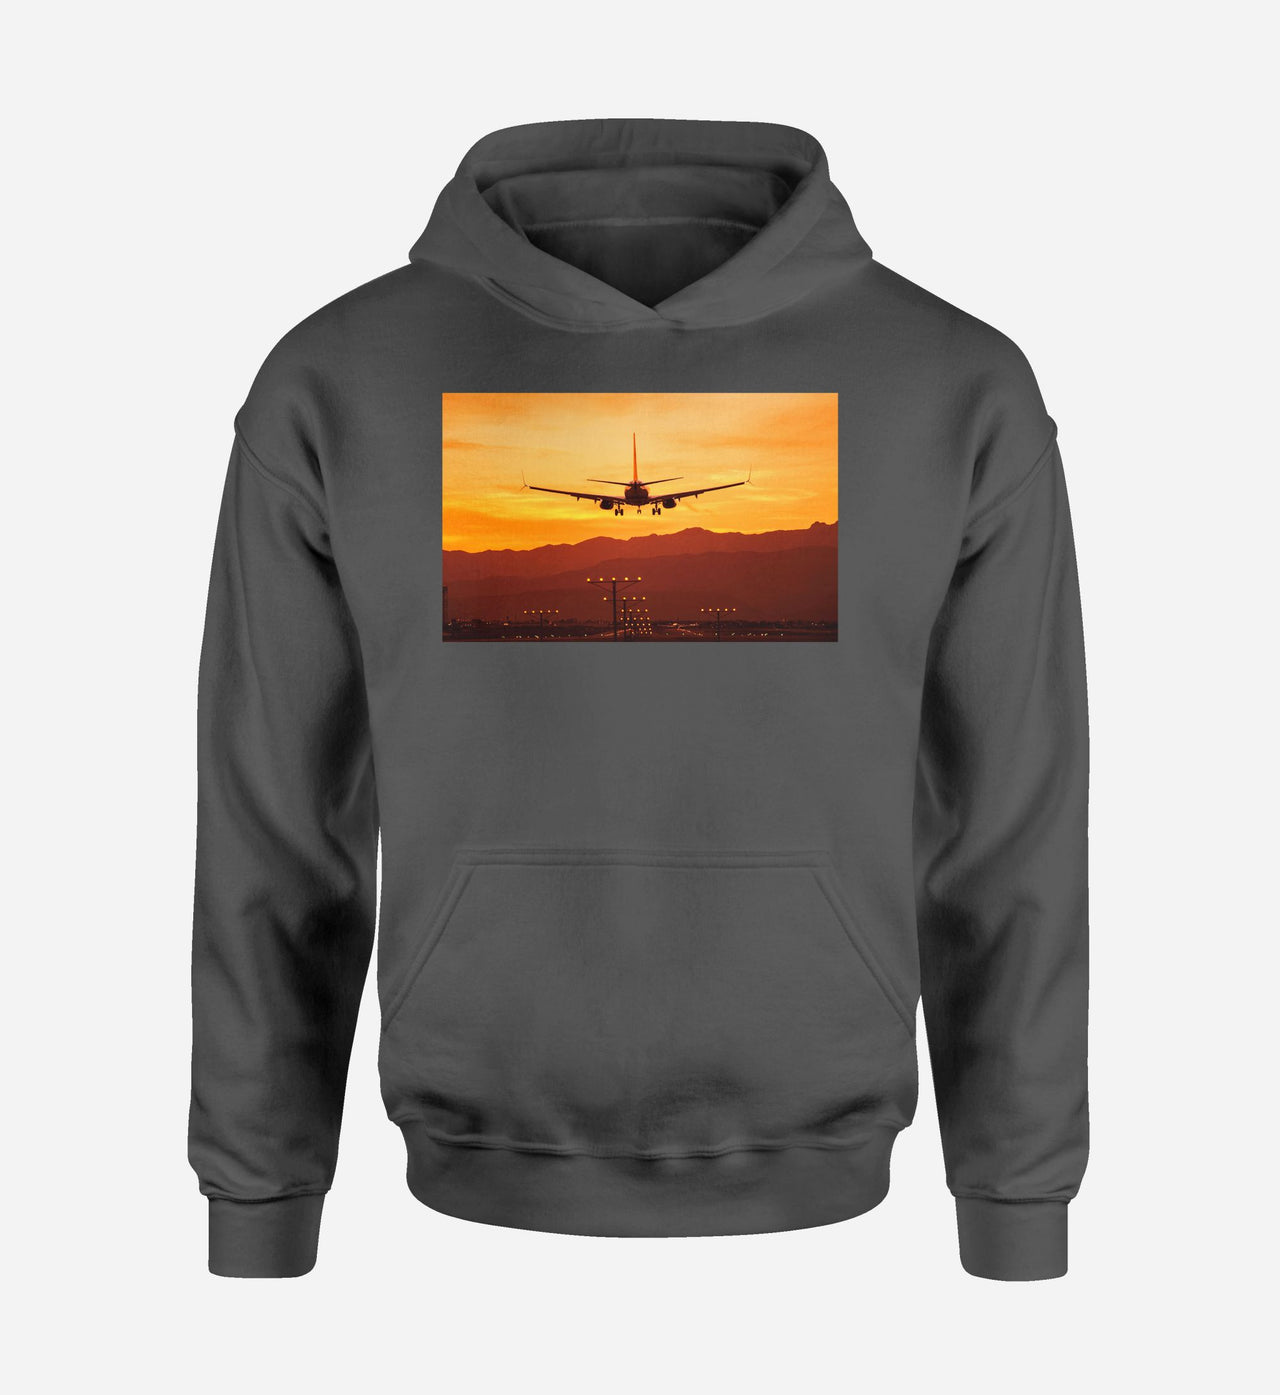 Landing Aircraft During Sunset Designed Hoodies